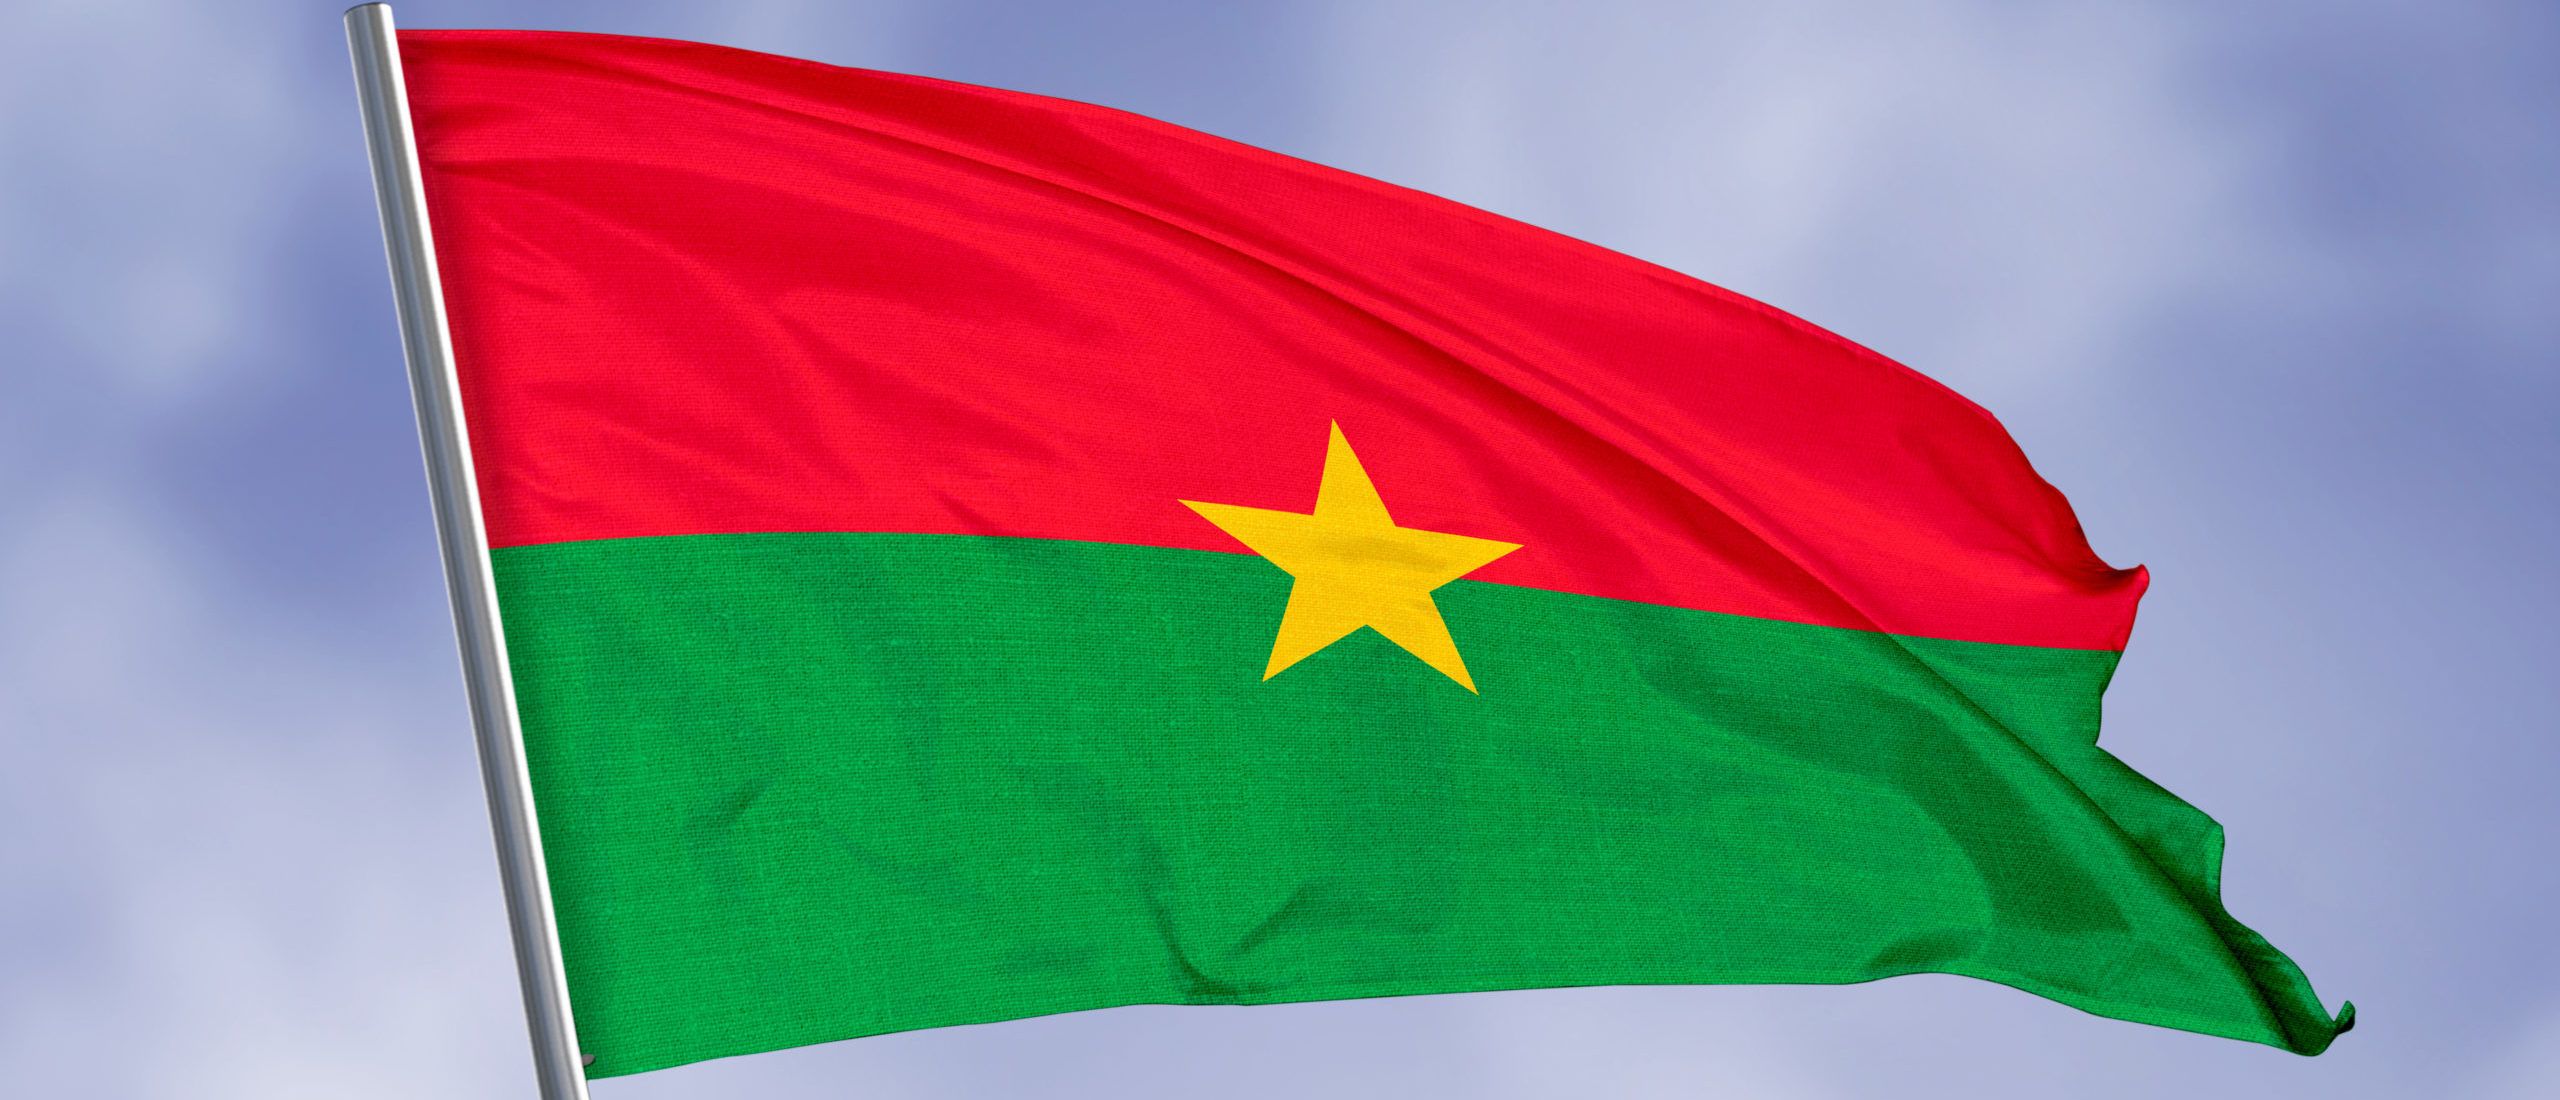 Roadside Bomb In Burkina Faso Kills At Least 35 People, Injures Dozens More